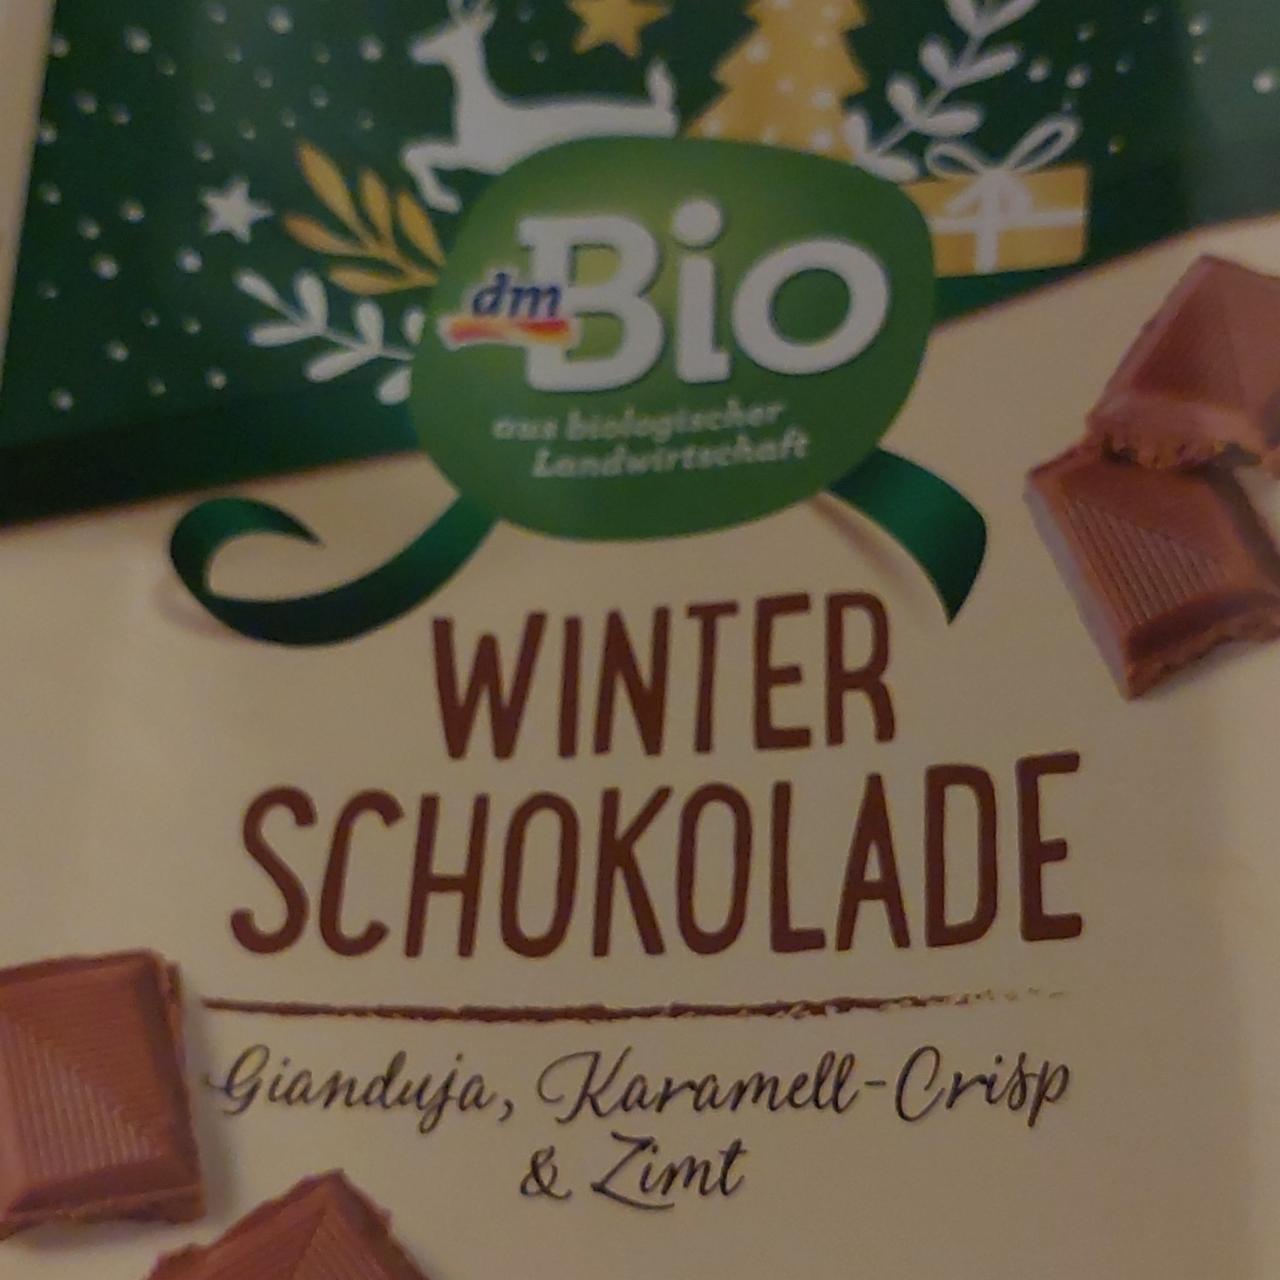 Fotografie - Winter Schokolade Gianduja, Karamell-Crisp & Zimt dmBio